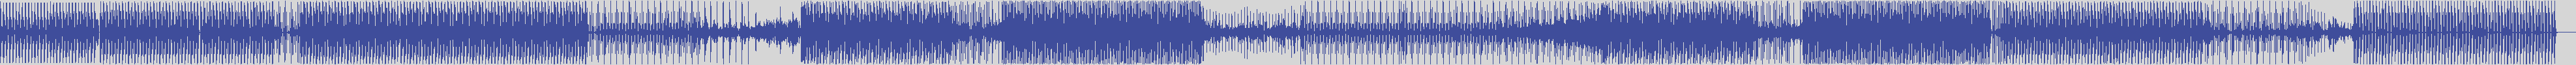 atomic_recordings [AR017] Chris-T, Matu - B-52 [Original Mix] audio wave form